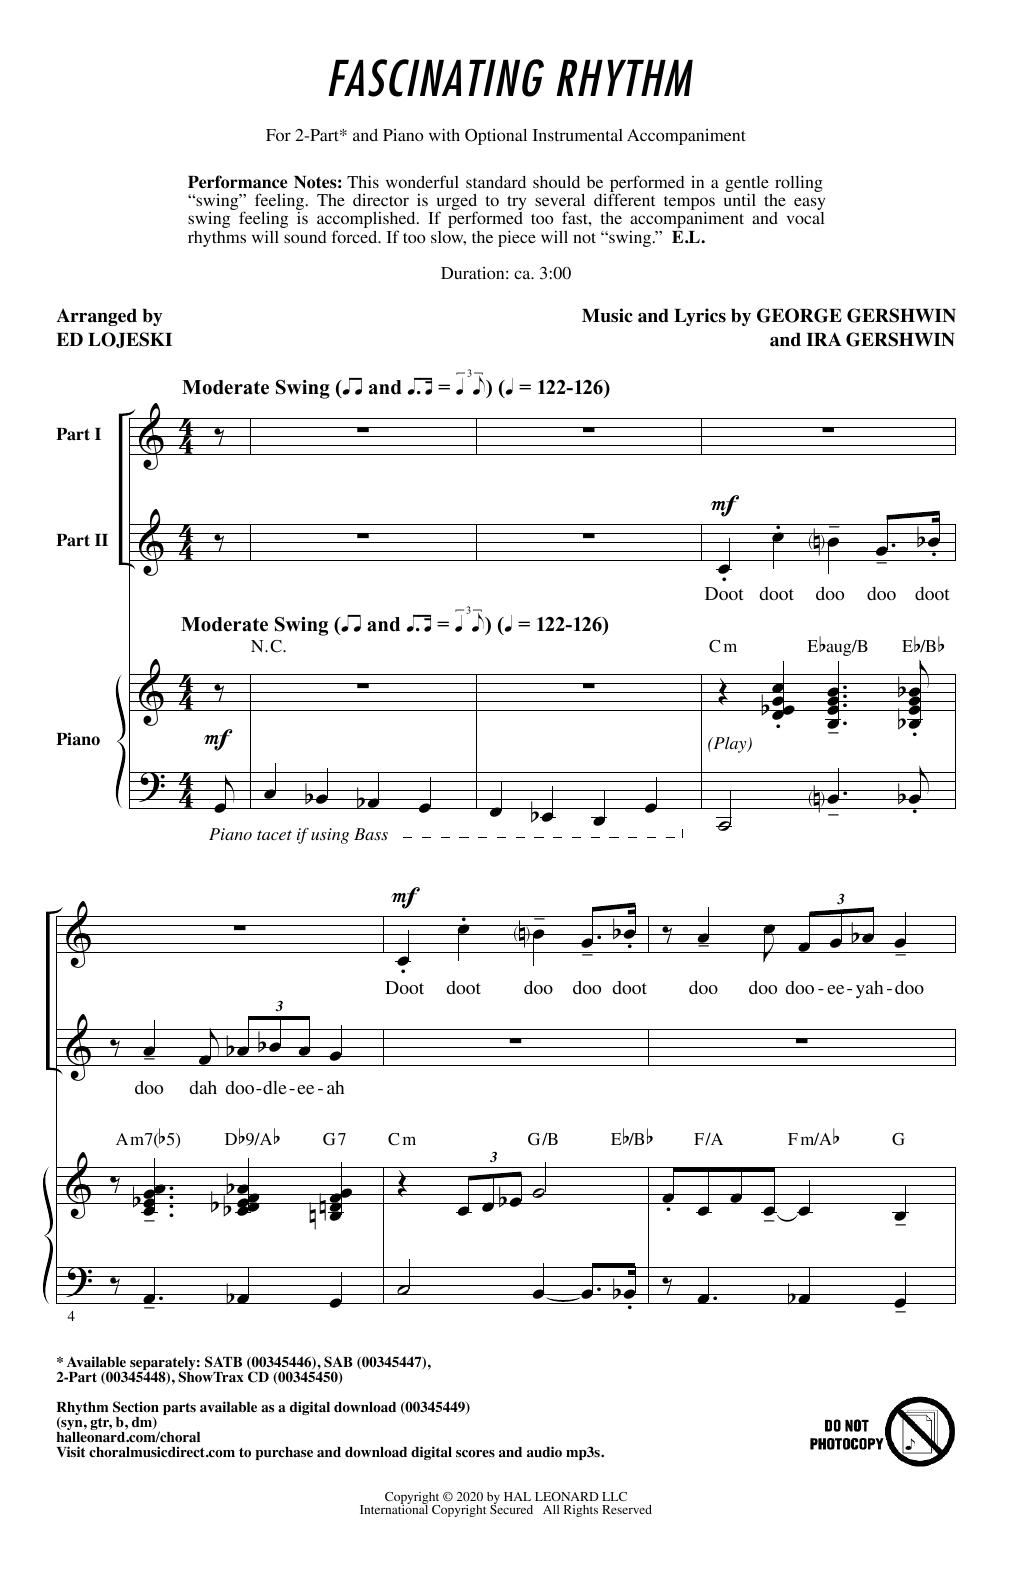 George Gershwin & Ira Gershwin Fascinating Rhythm (from Lady Be Good) (arr. Ed Lojeski) Sheet Music Notes & Chords for 2-Part Choir - Download or Print PDF